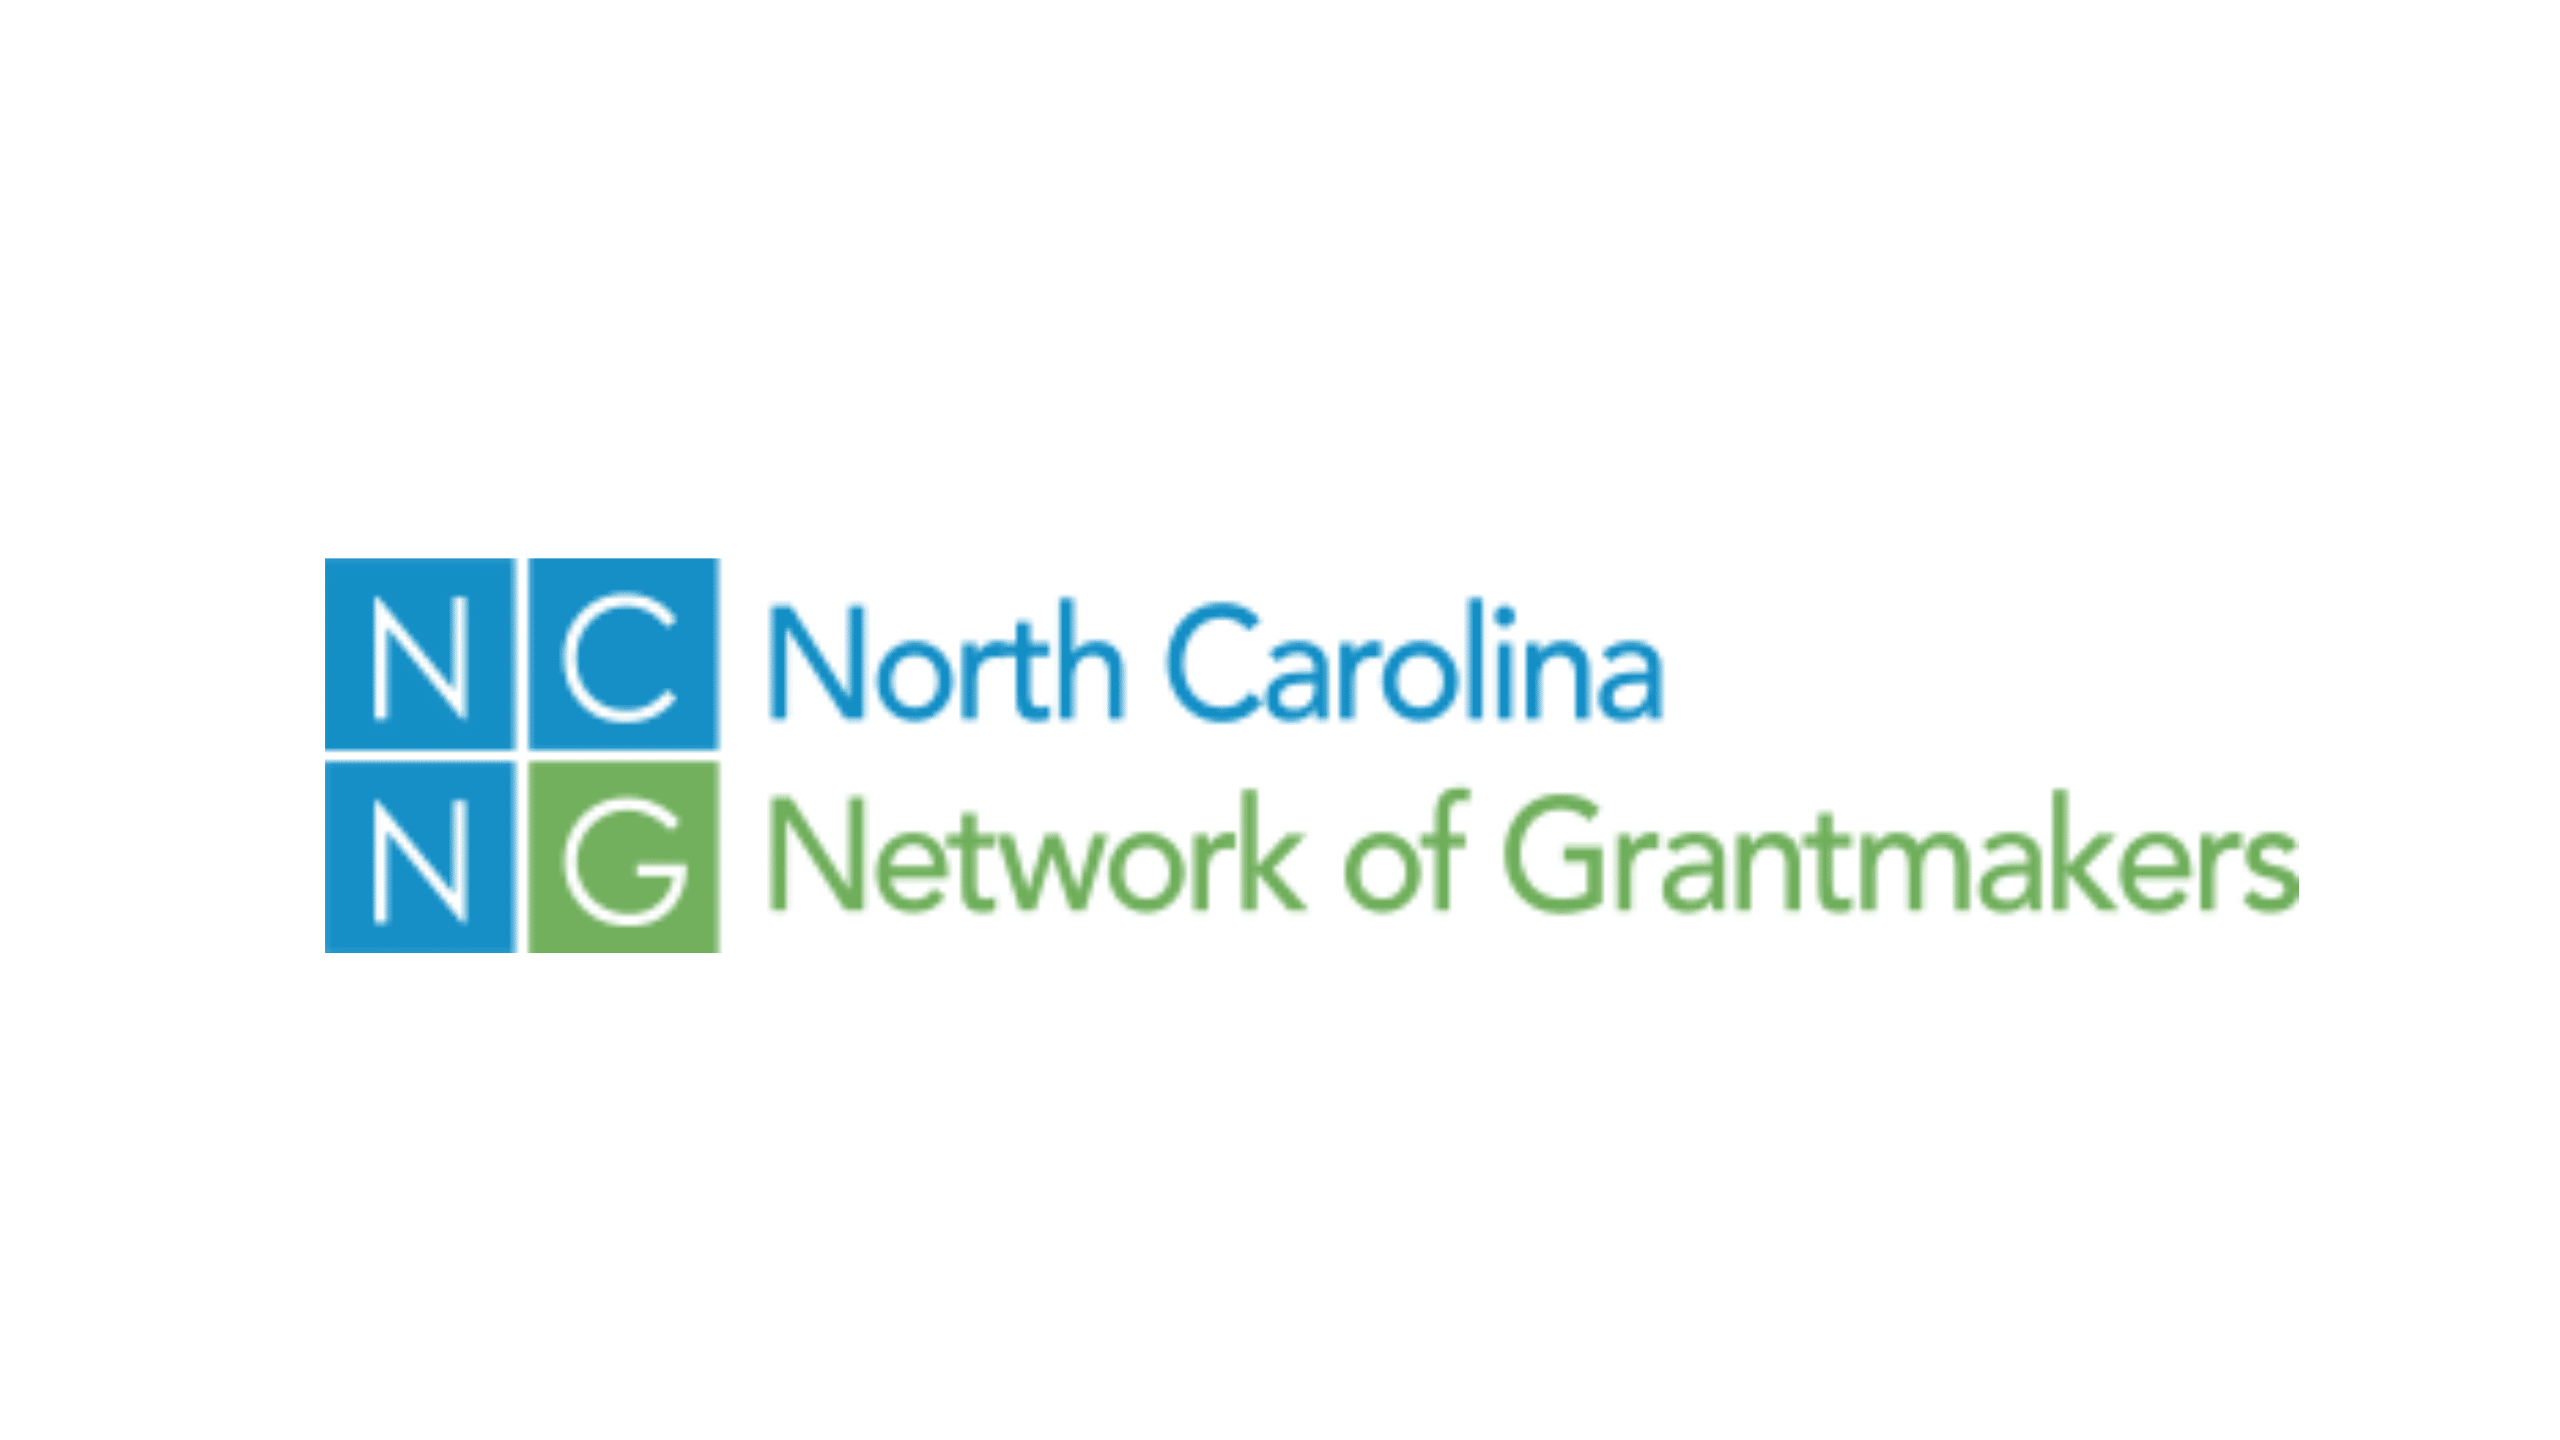 Partner News: North Carolina Network of Grantmakers seeks Executive Director